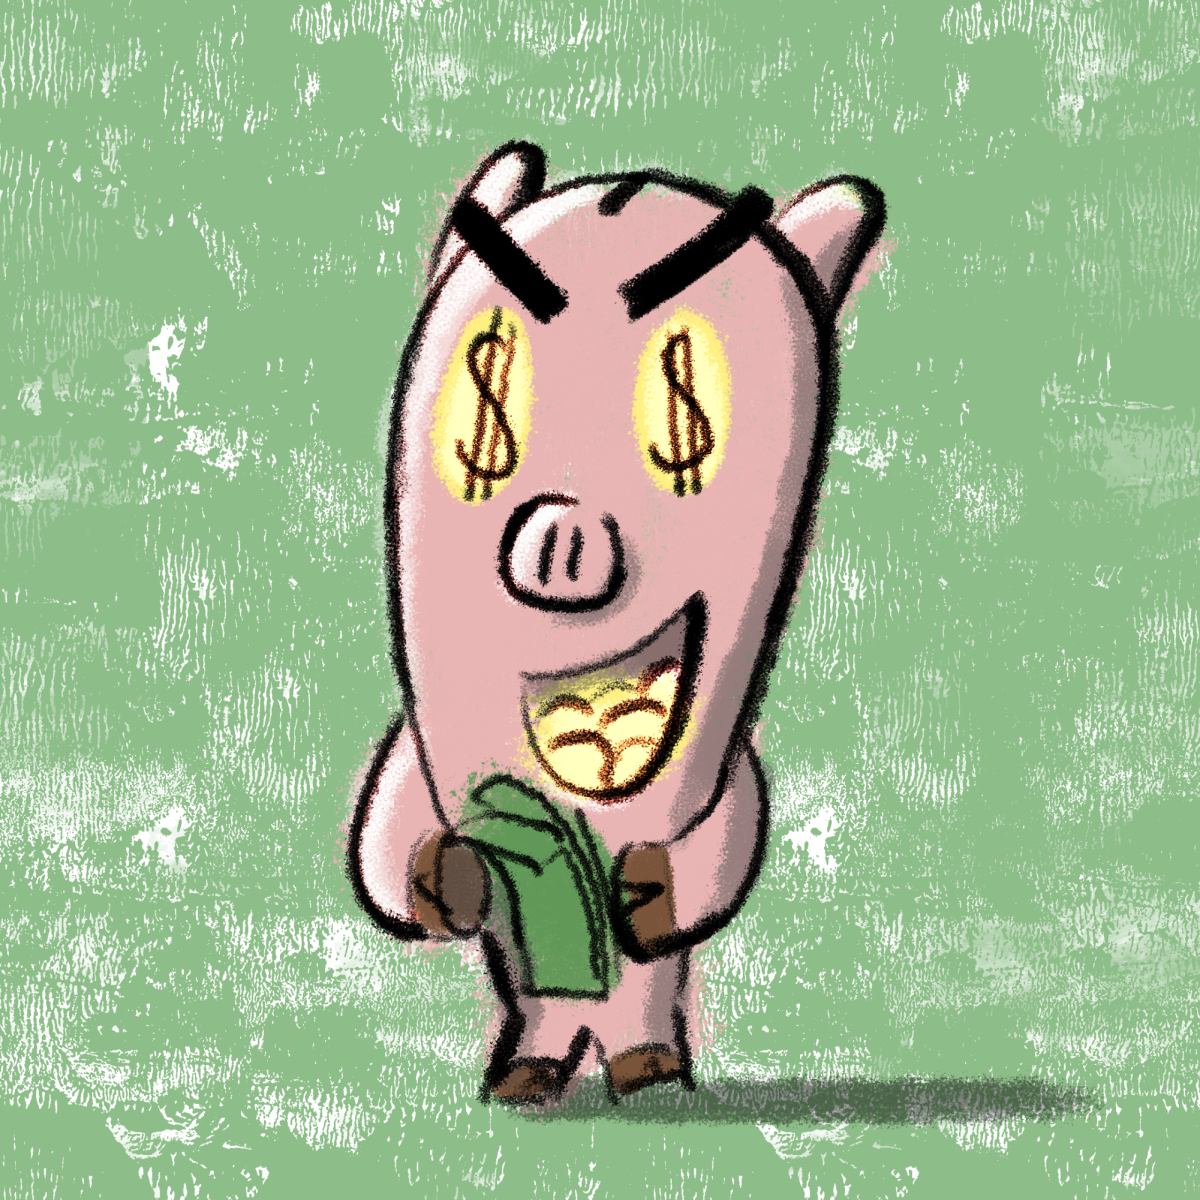 Study by UT professor reveals pig-butchering scams have stolen over $75 Billion